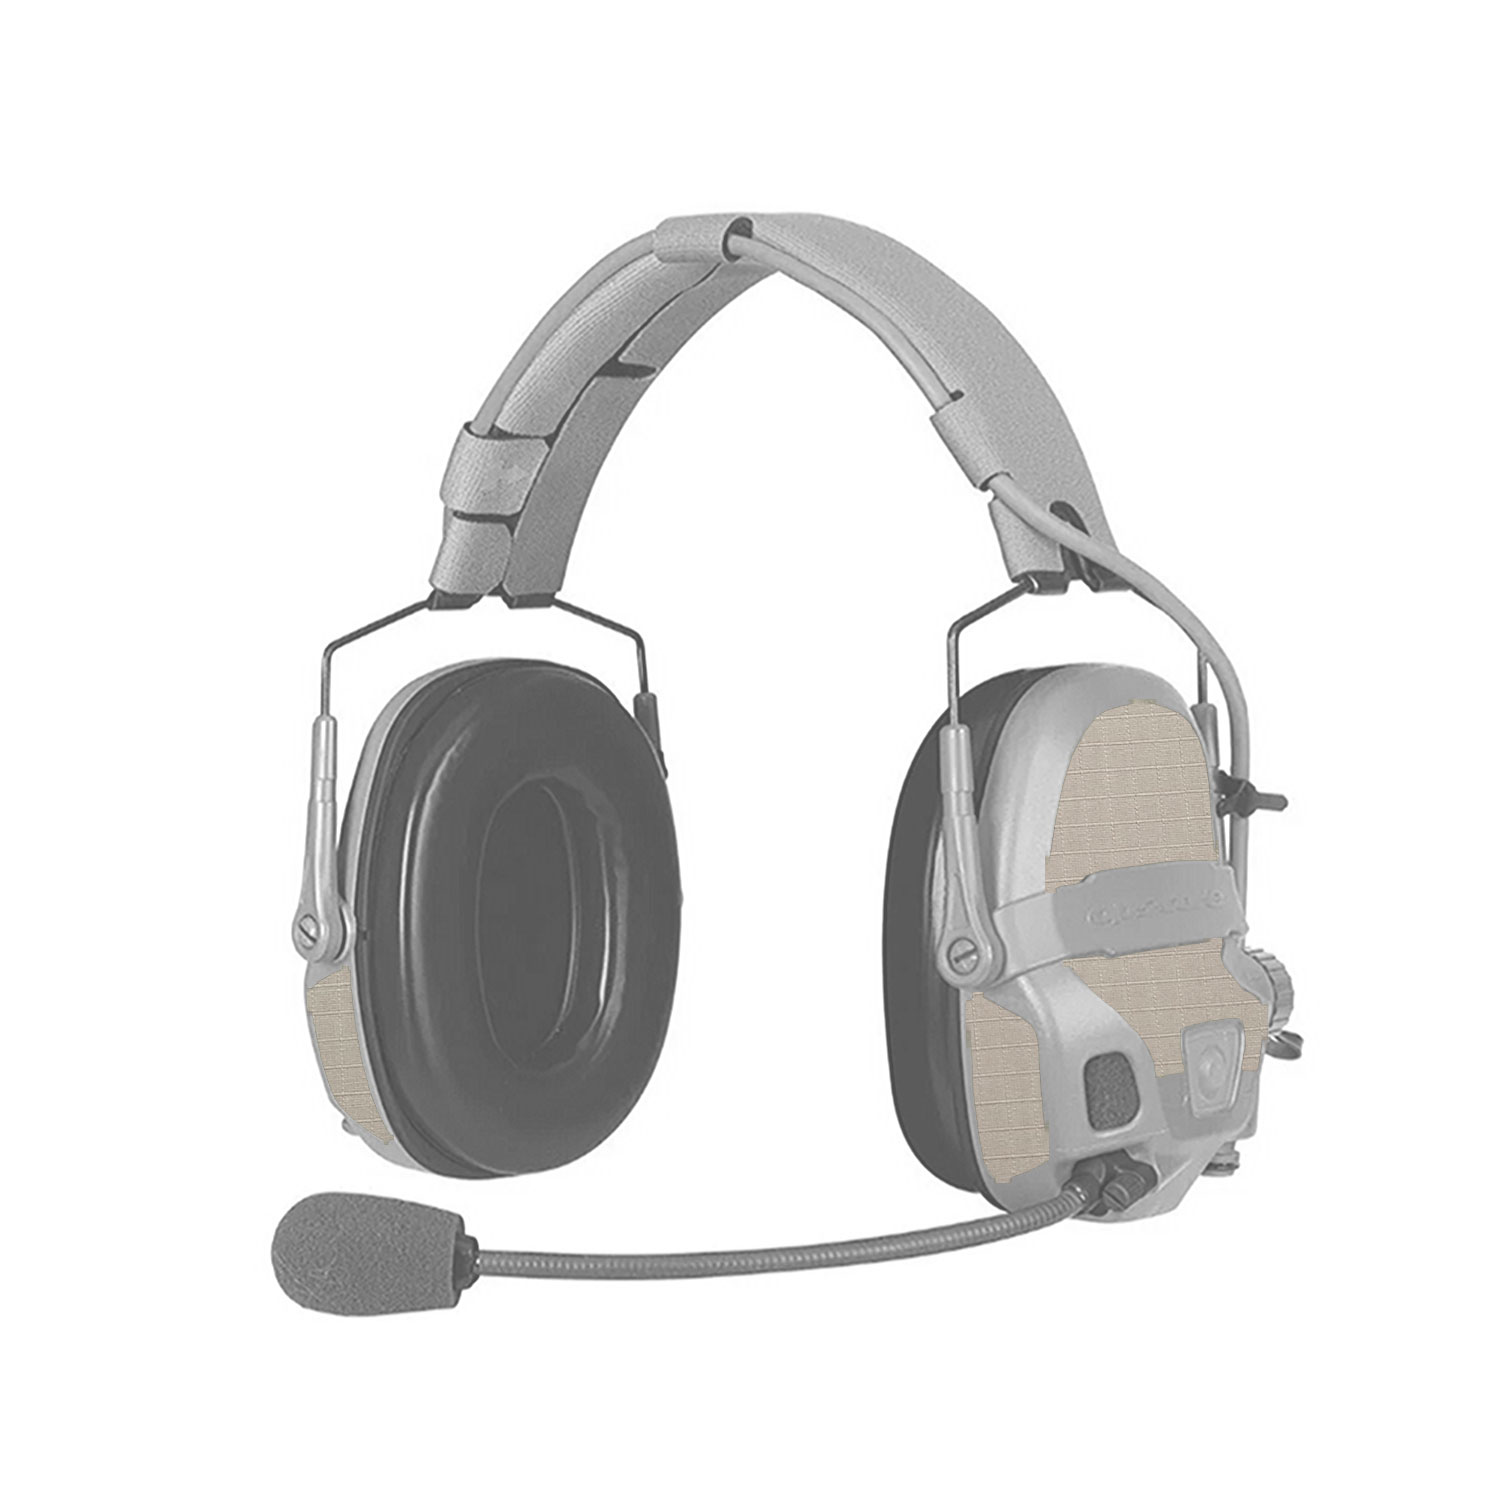 amp-headset-tan-2